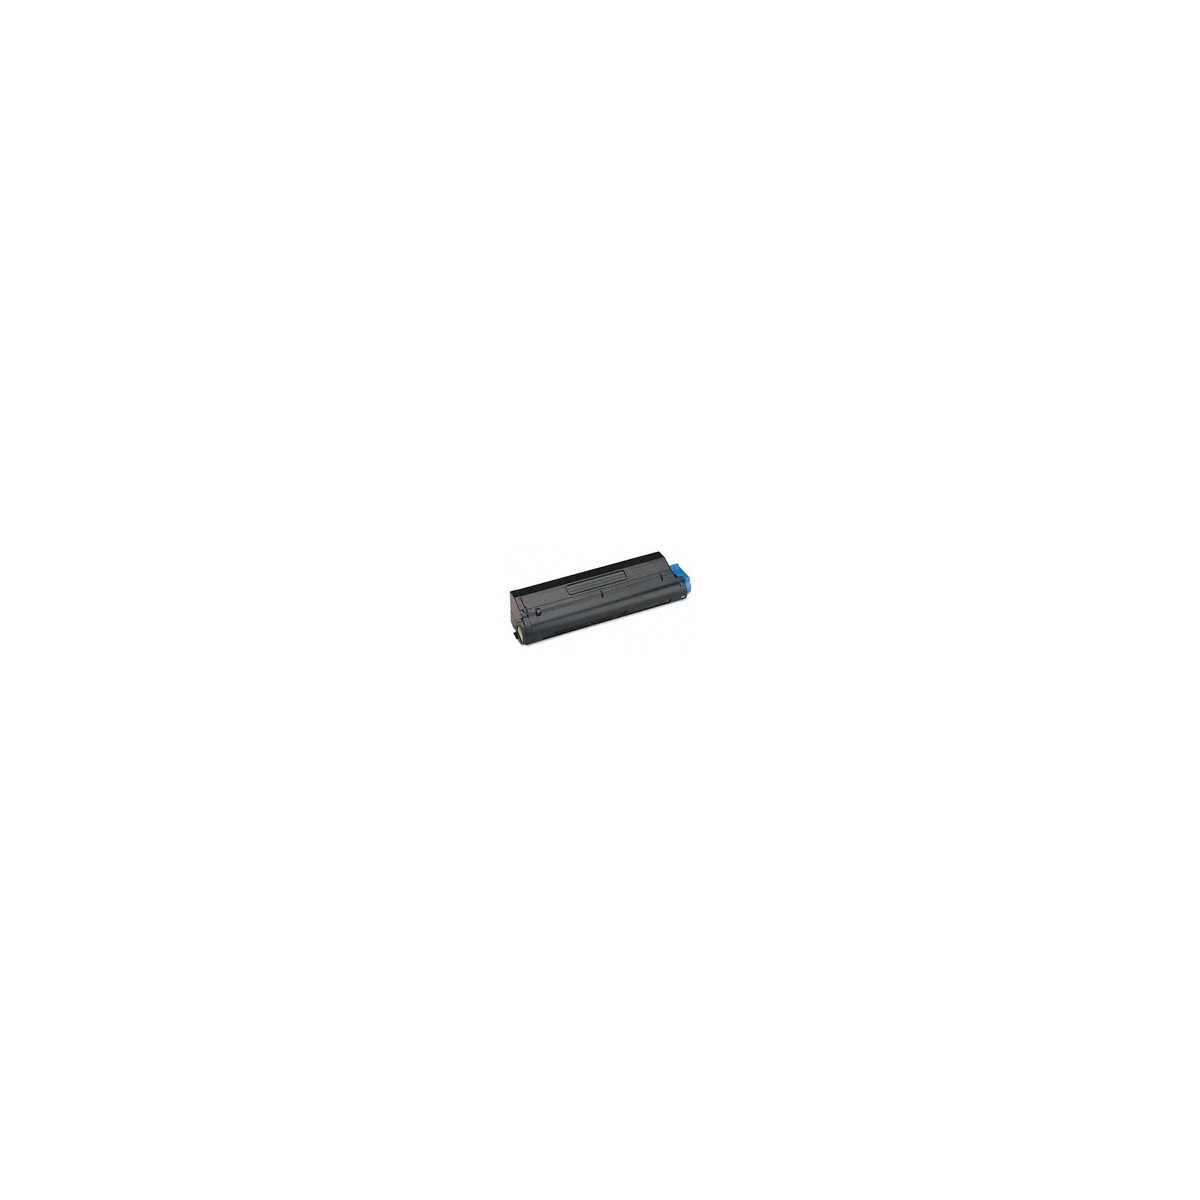 OKI MB480 Black Toner Cartridge - 12000 pages - Black